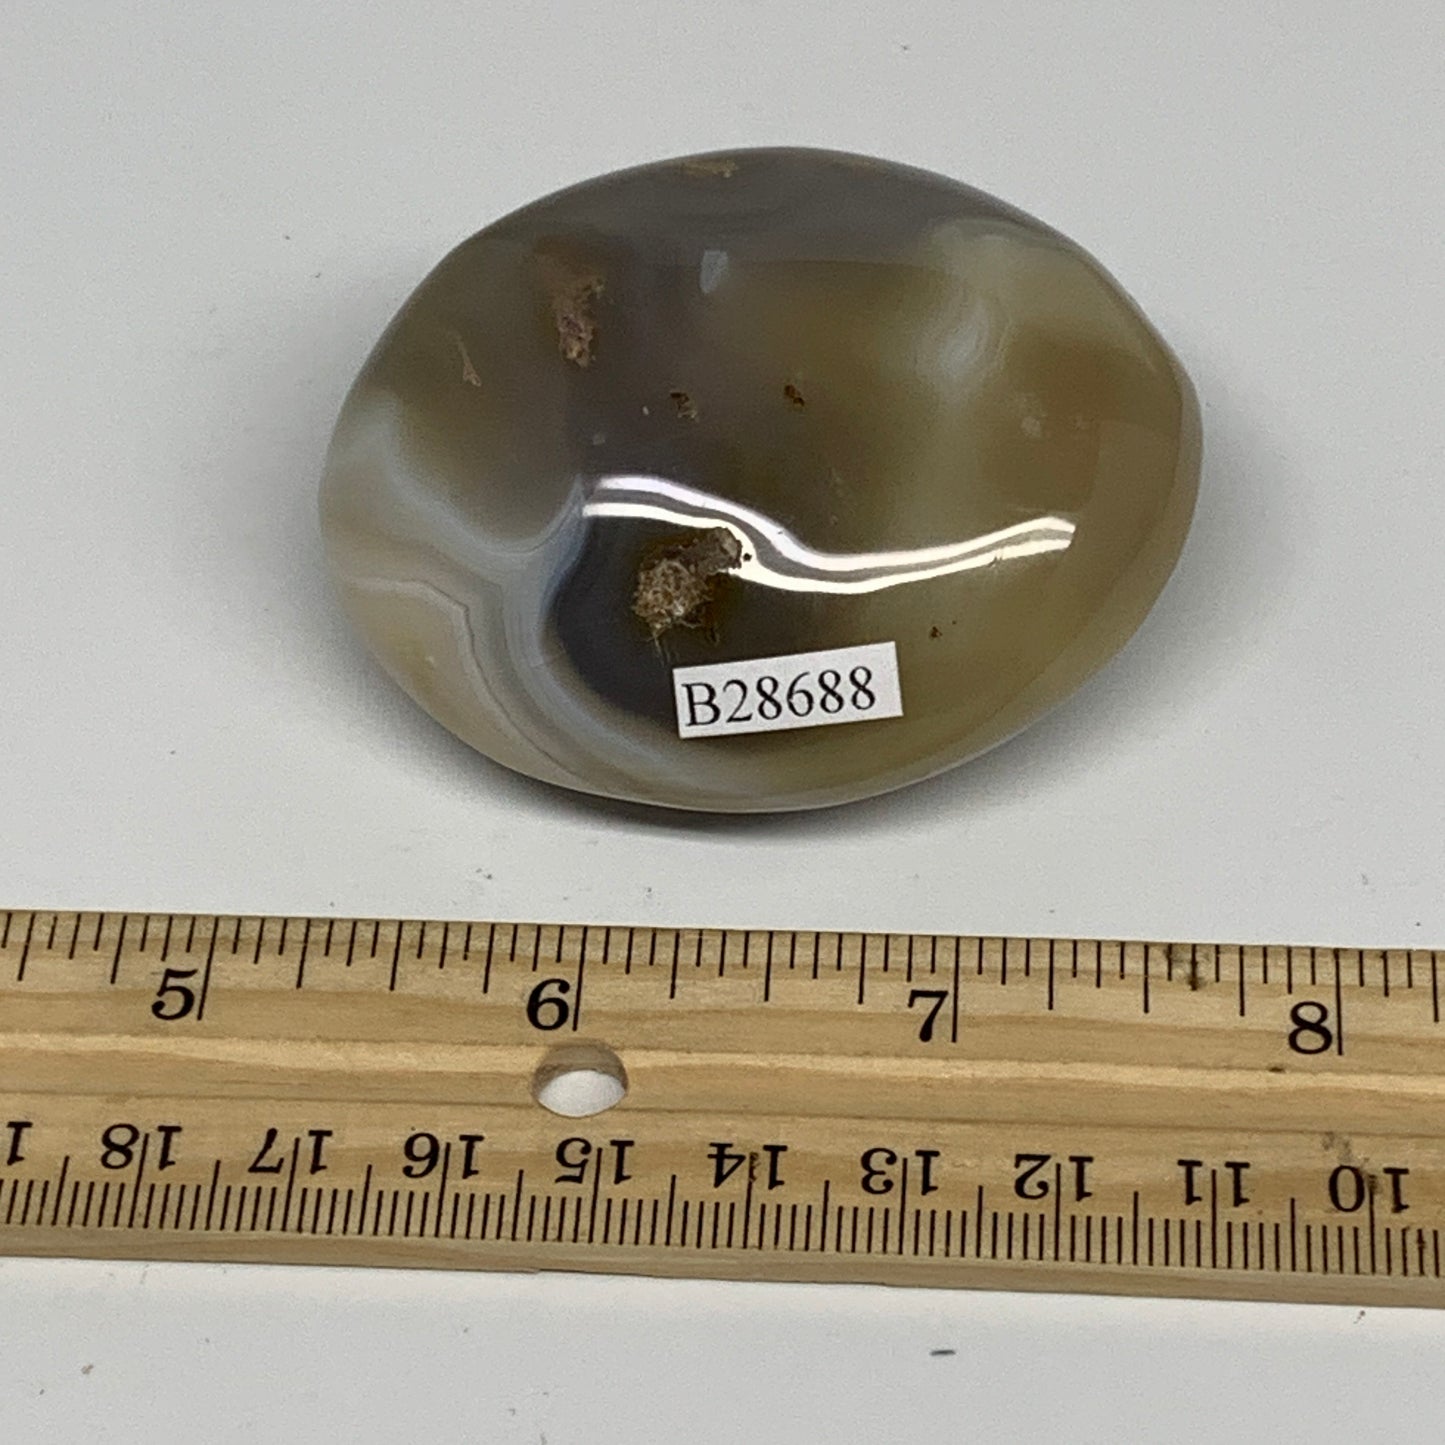 118.4g, 2.5"x2"x1.2" Orca Agate Palm-Stone Reiki Energy Crystal Reiki, B28688